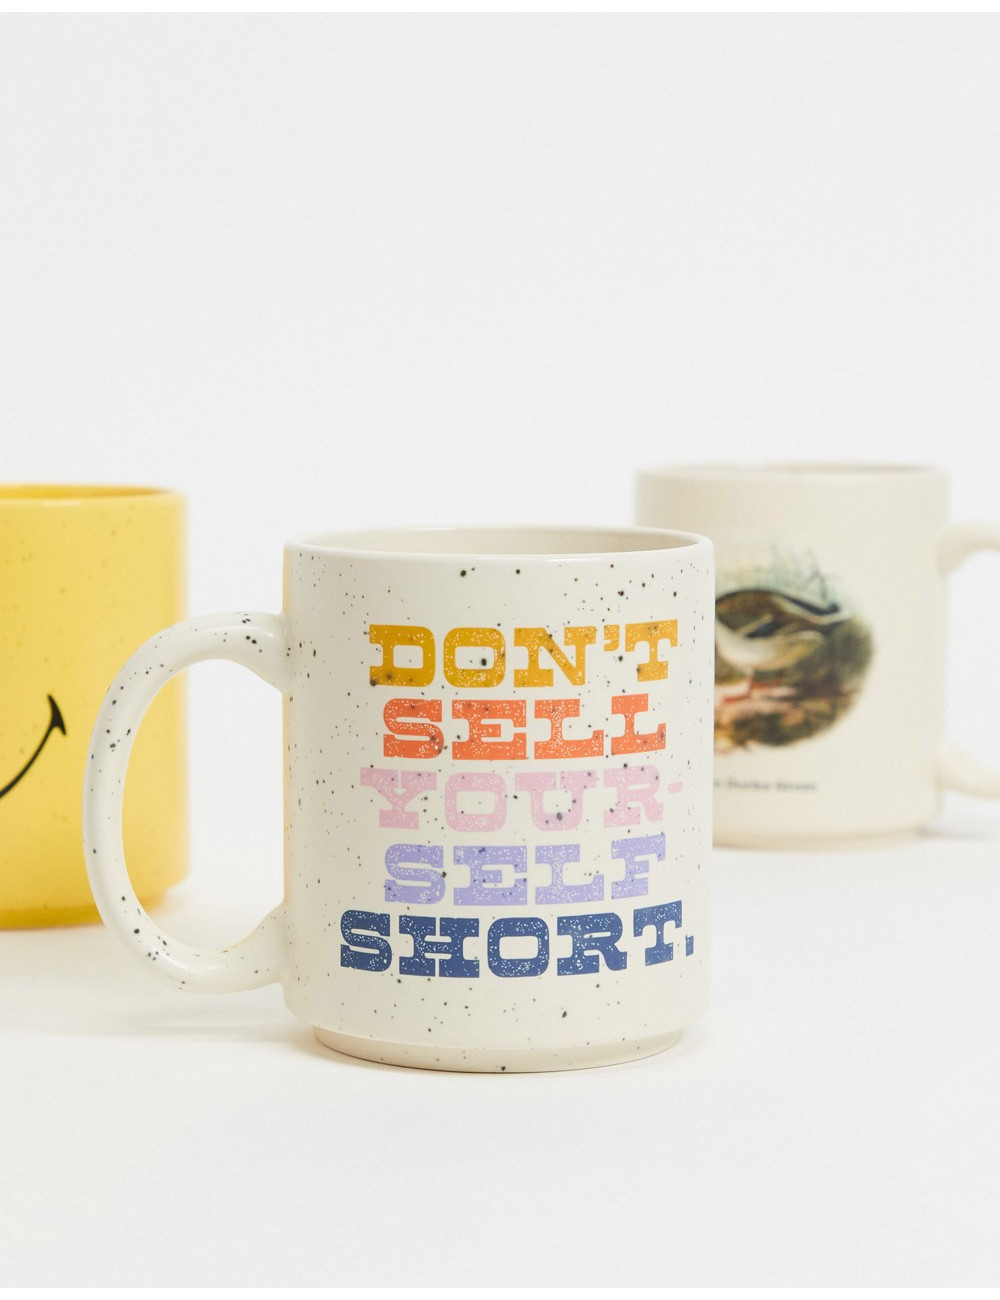 Typo mug with slogan 'don't...